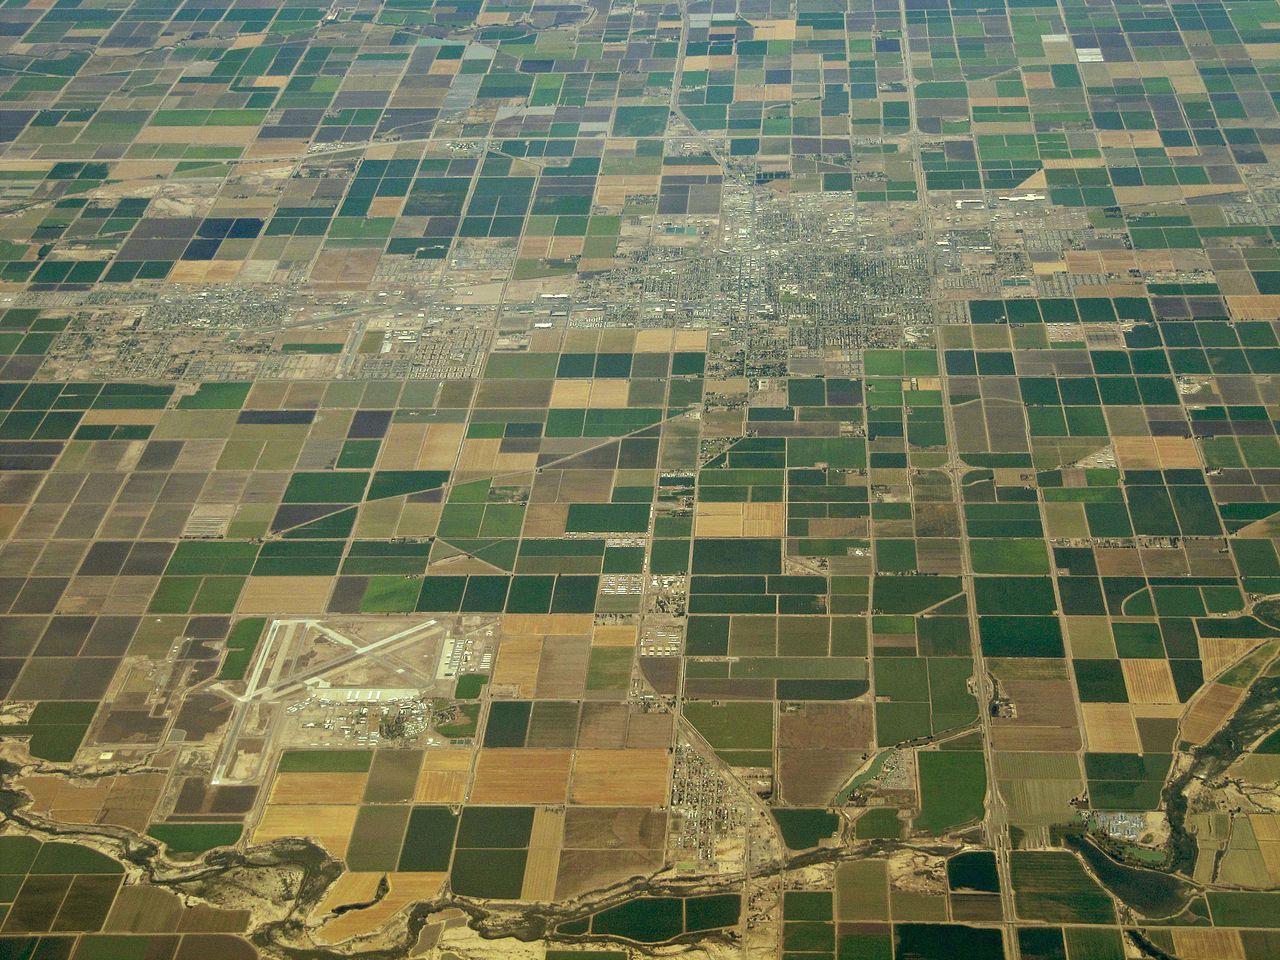 Aerial view of farmlands